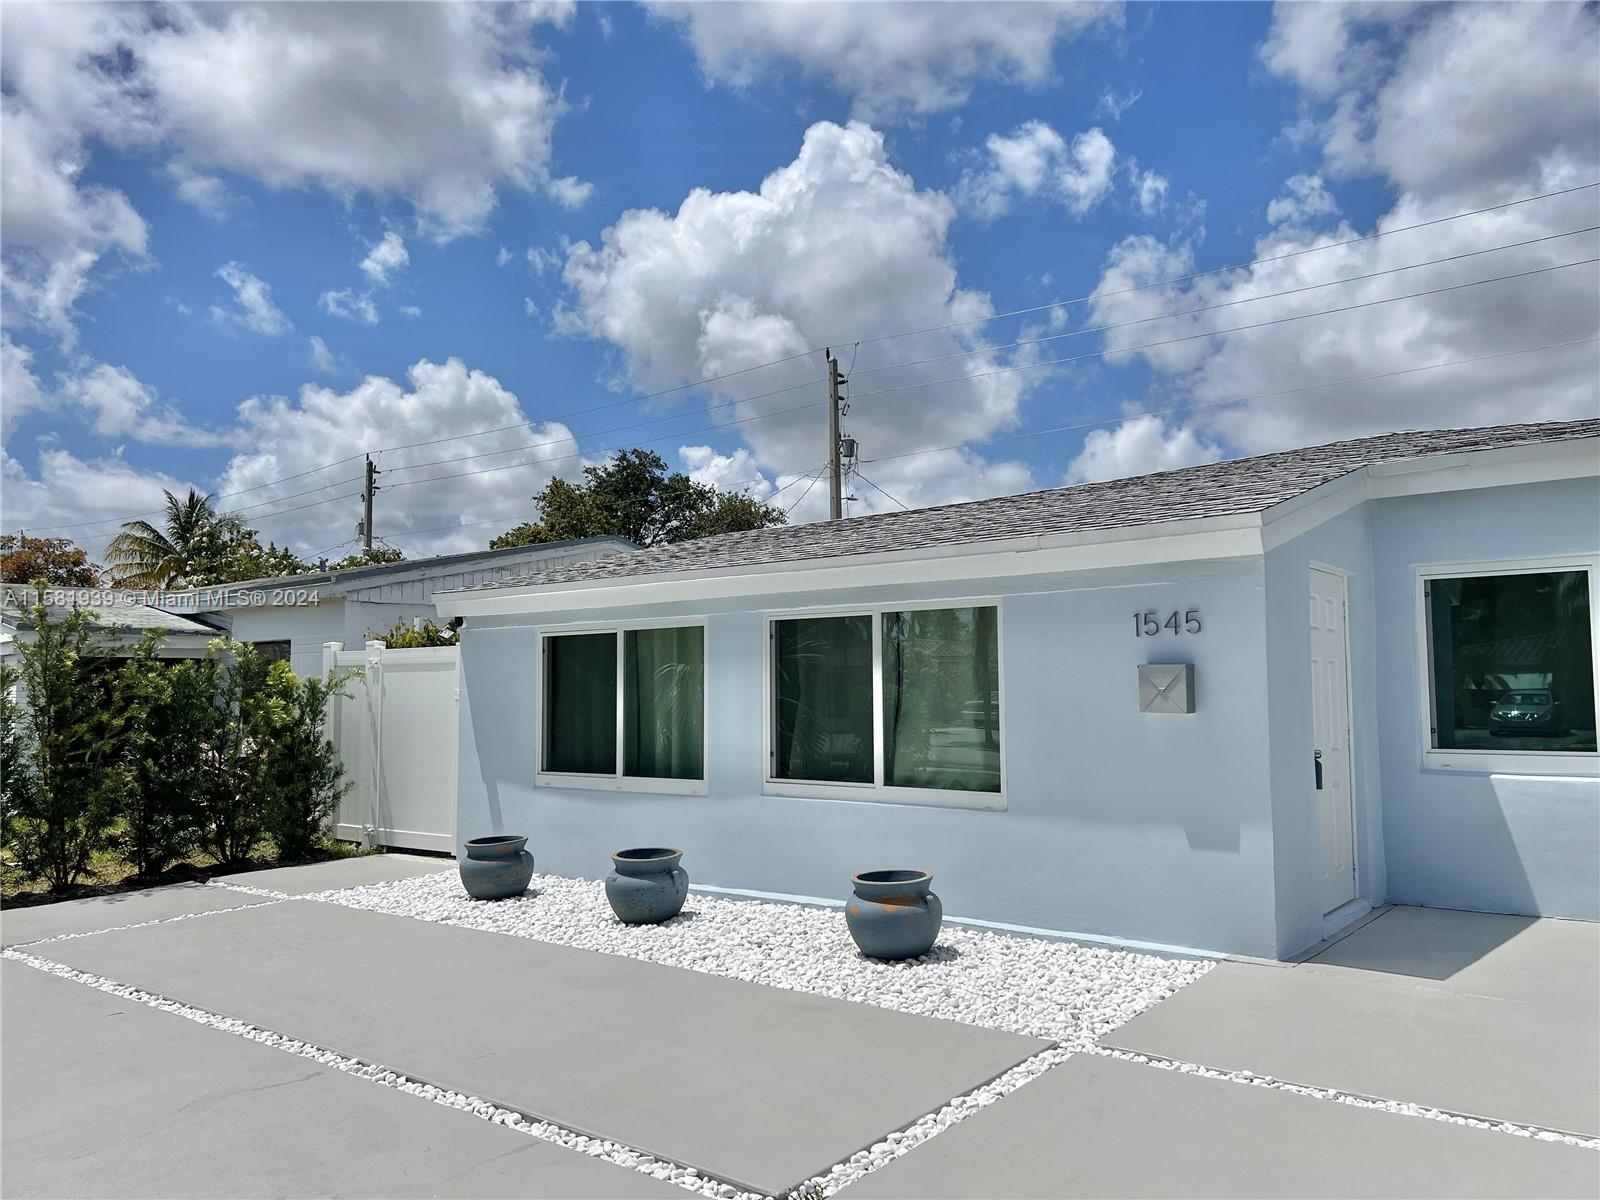 1545 Ne 175th St, North Miami Beach, Miami-Dade County, Florida - 3 Bedrooms  
1 Bathrooms - 